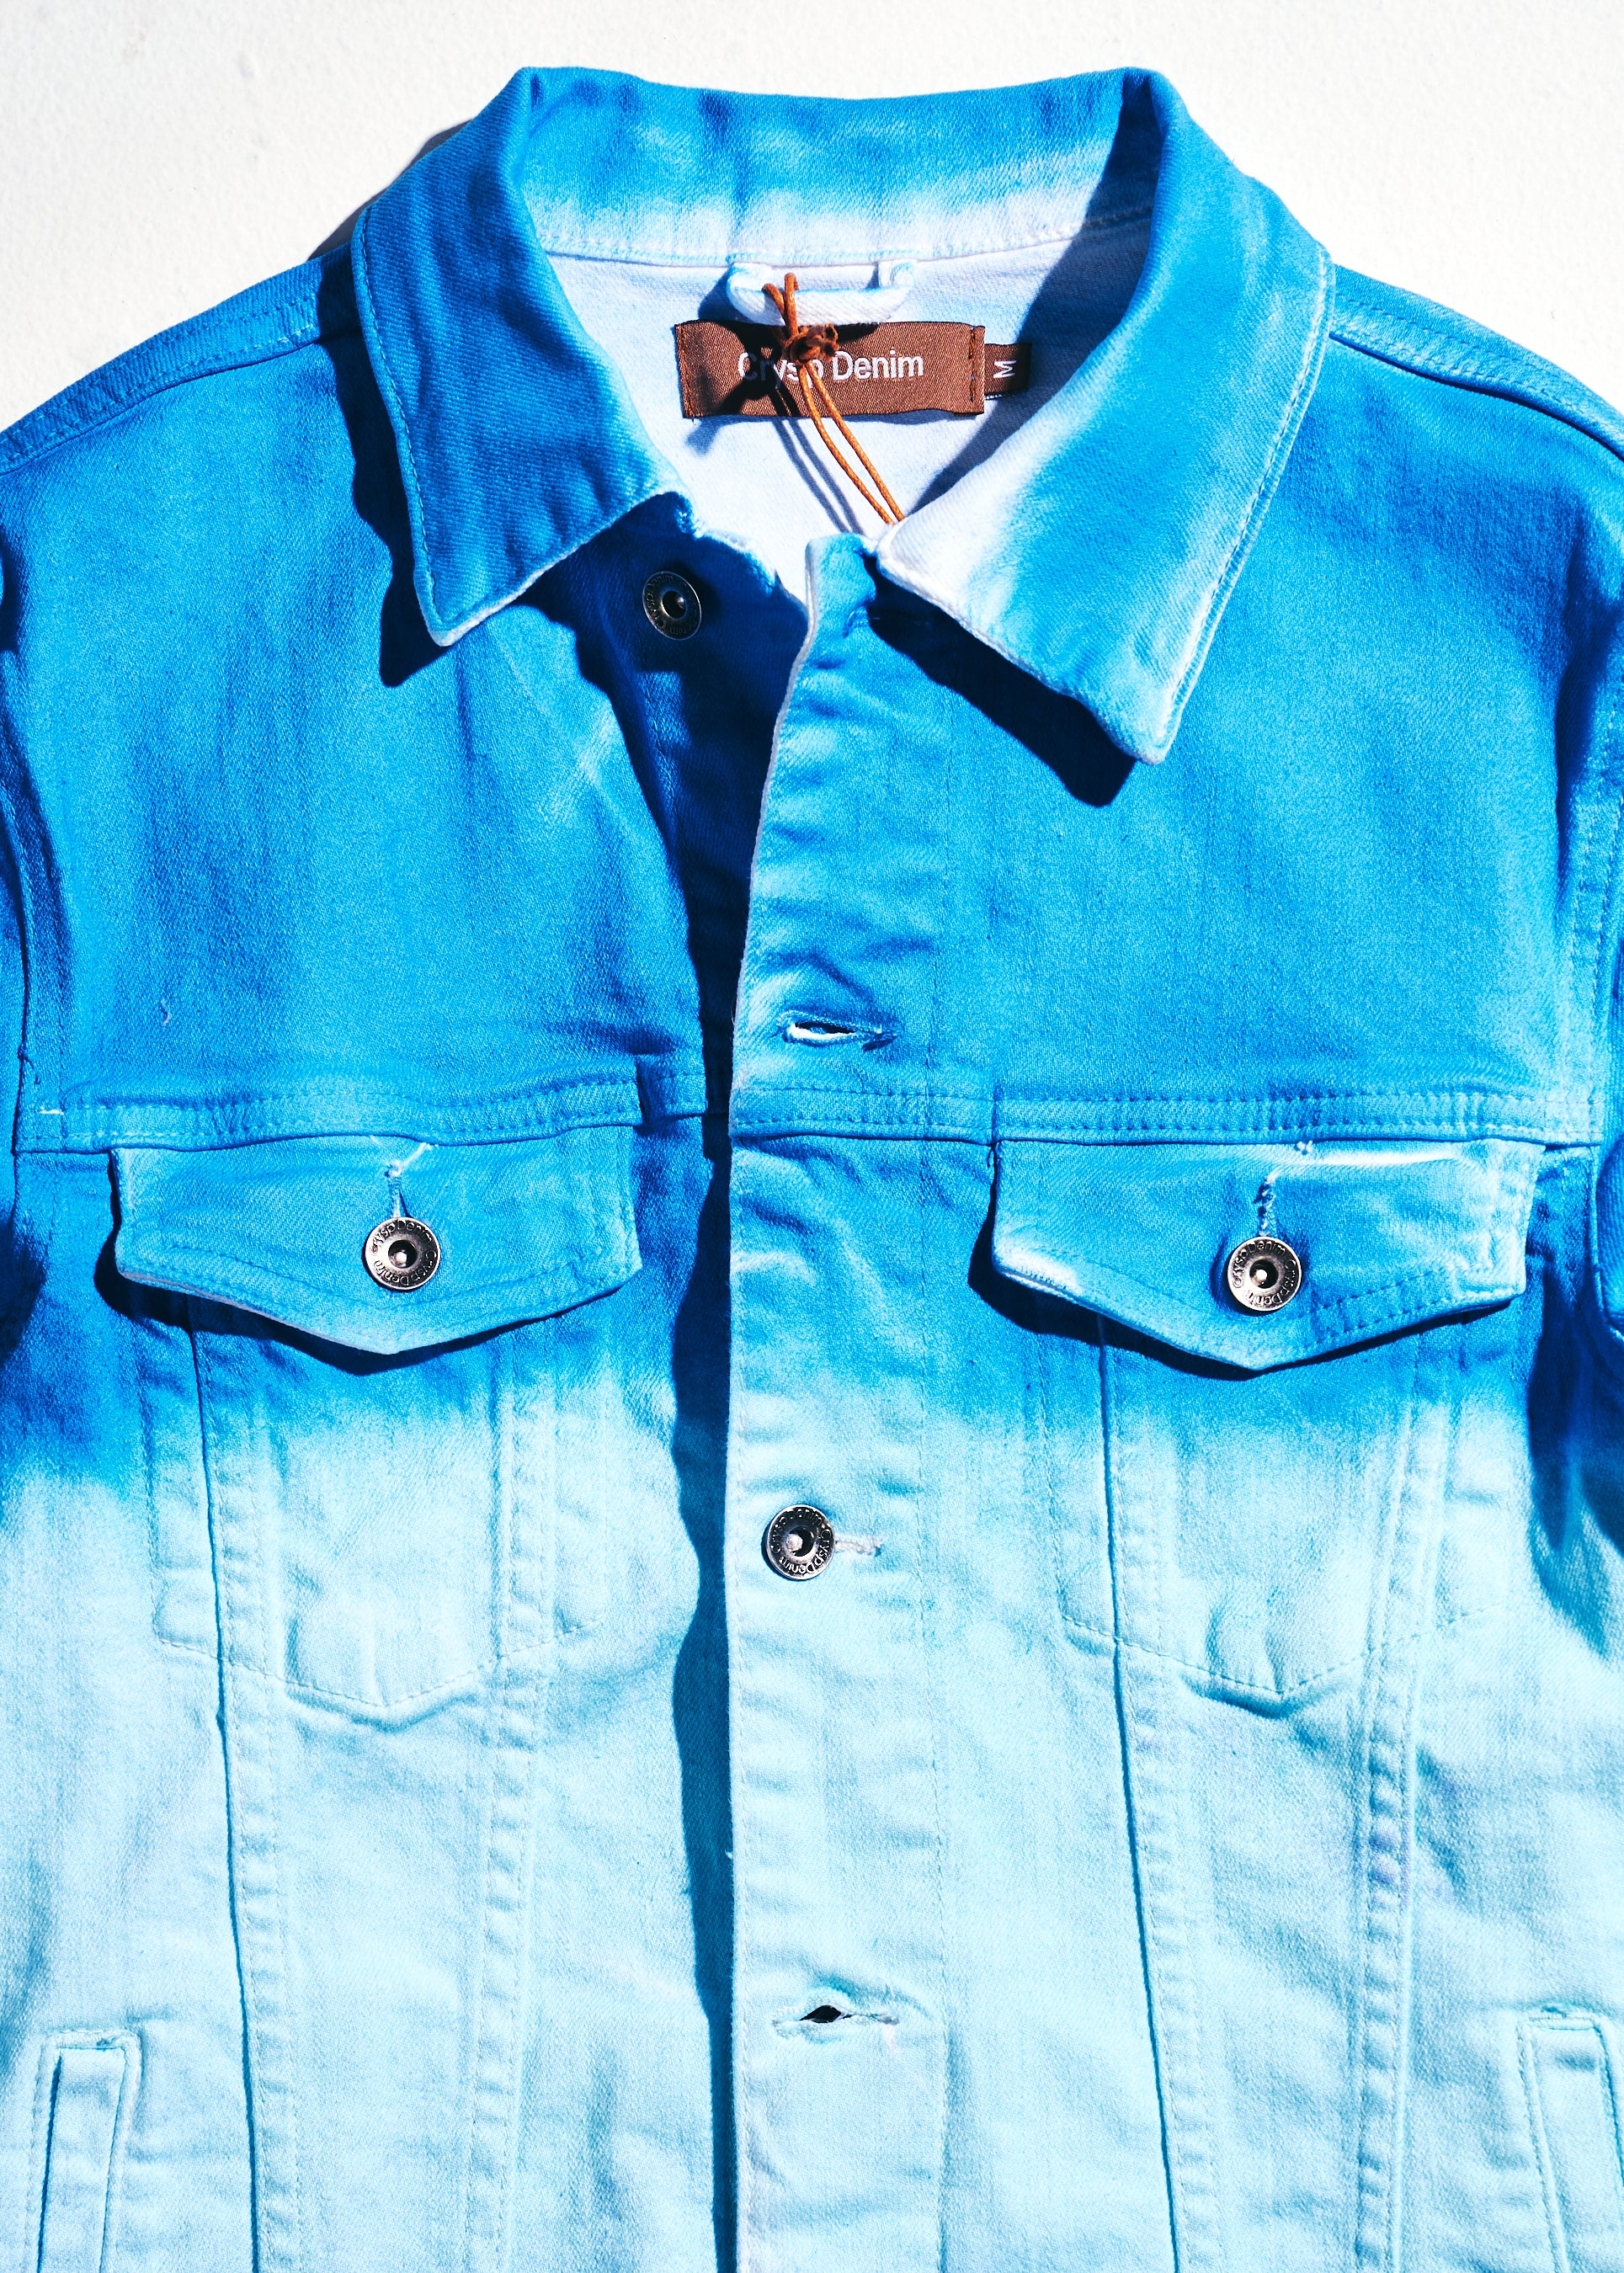 Bering Denim Jacket (Light Tie Dye) – Crysp Denim